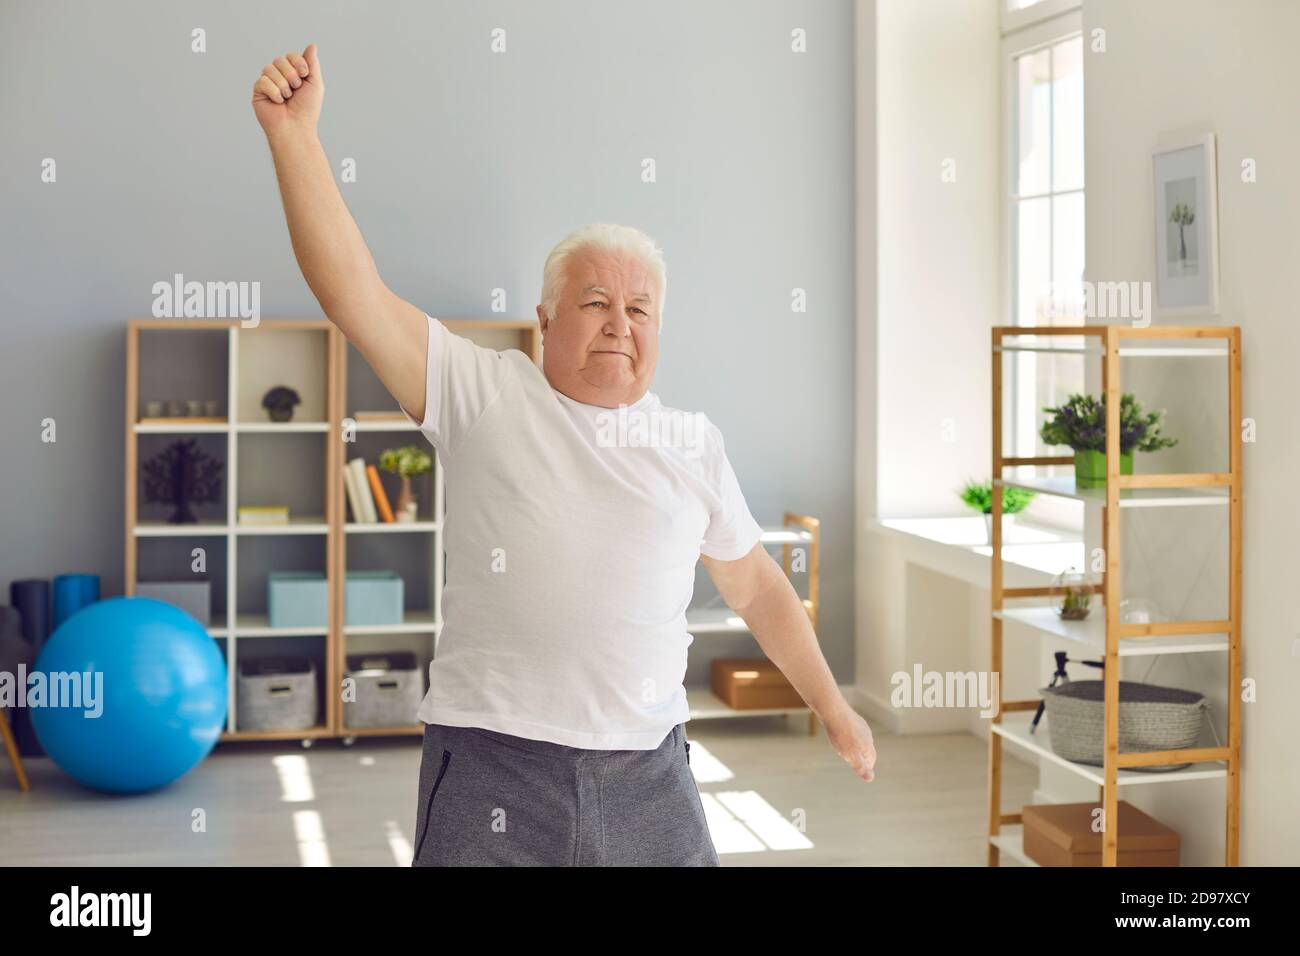 Smiling positive elderly man doing exercises or light fitness training at home or in rehabilitation center Stock Photo